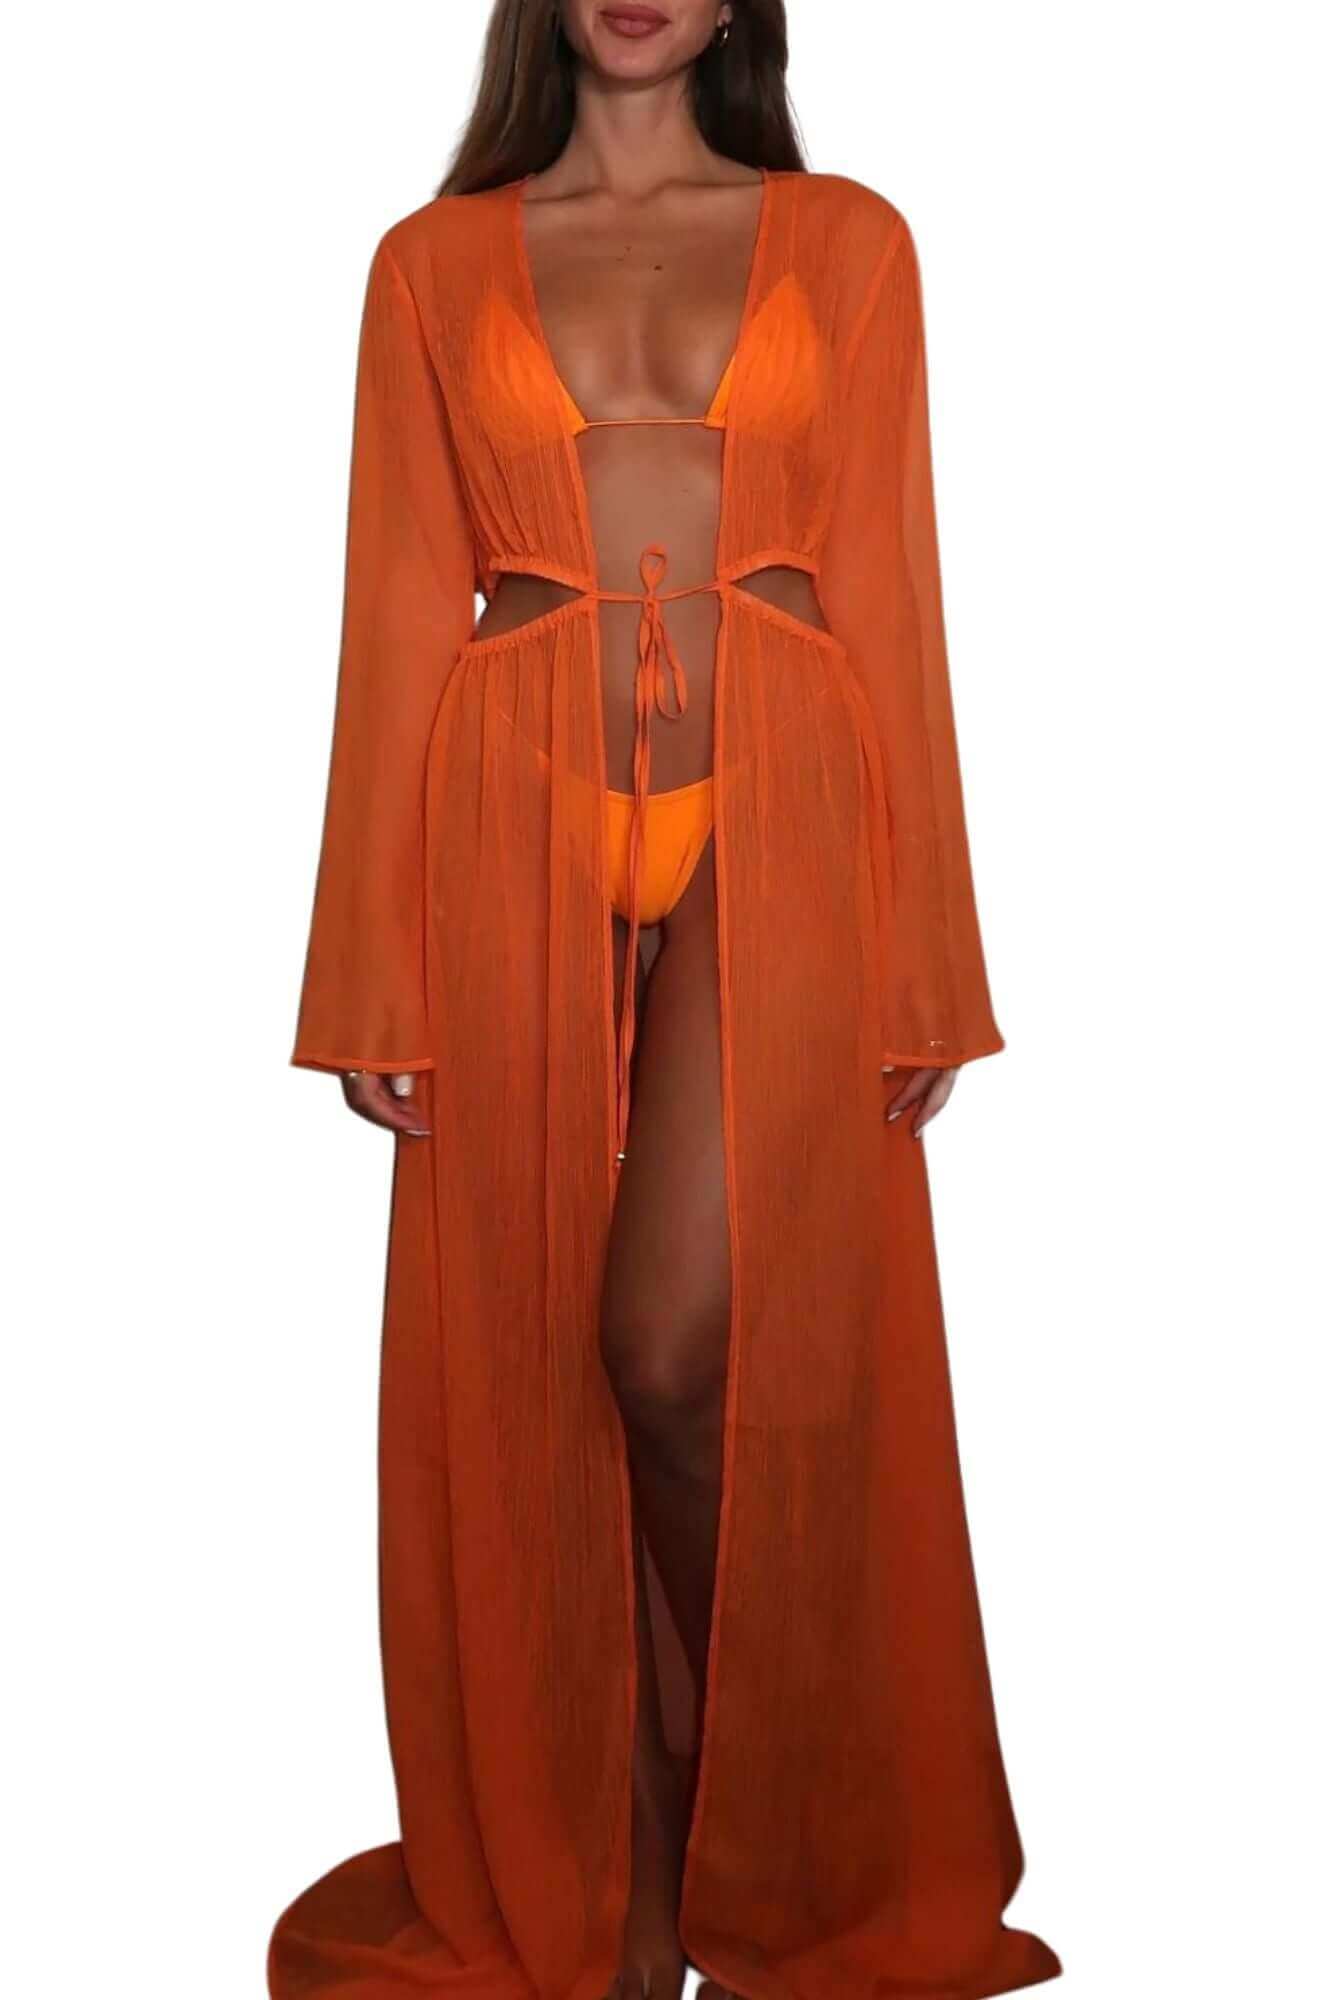 Scarlett Dress in Royal Orange